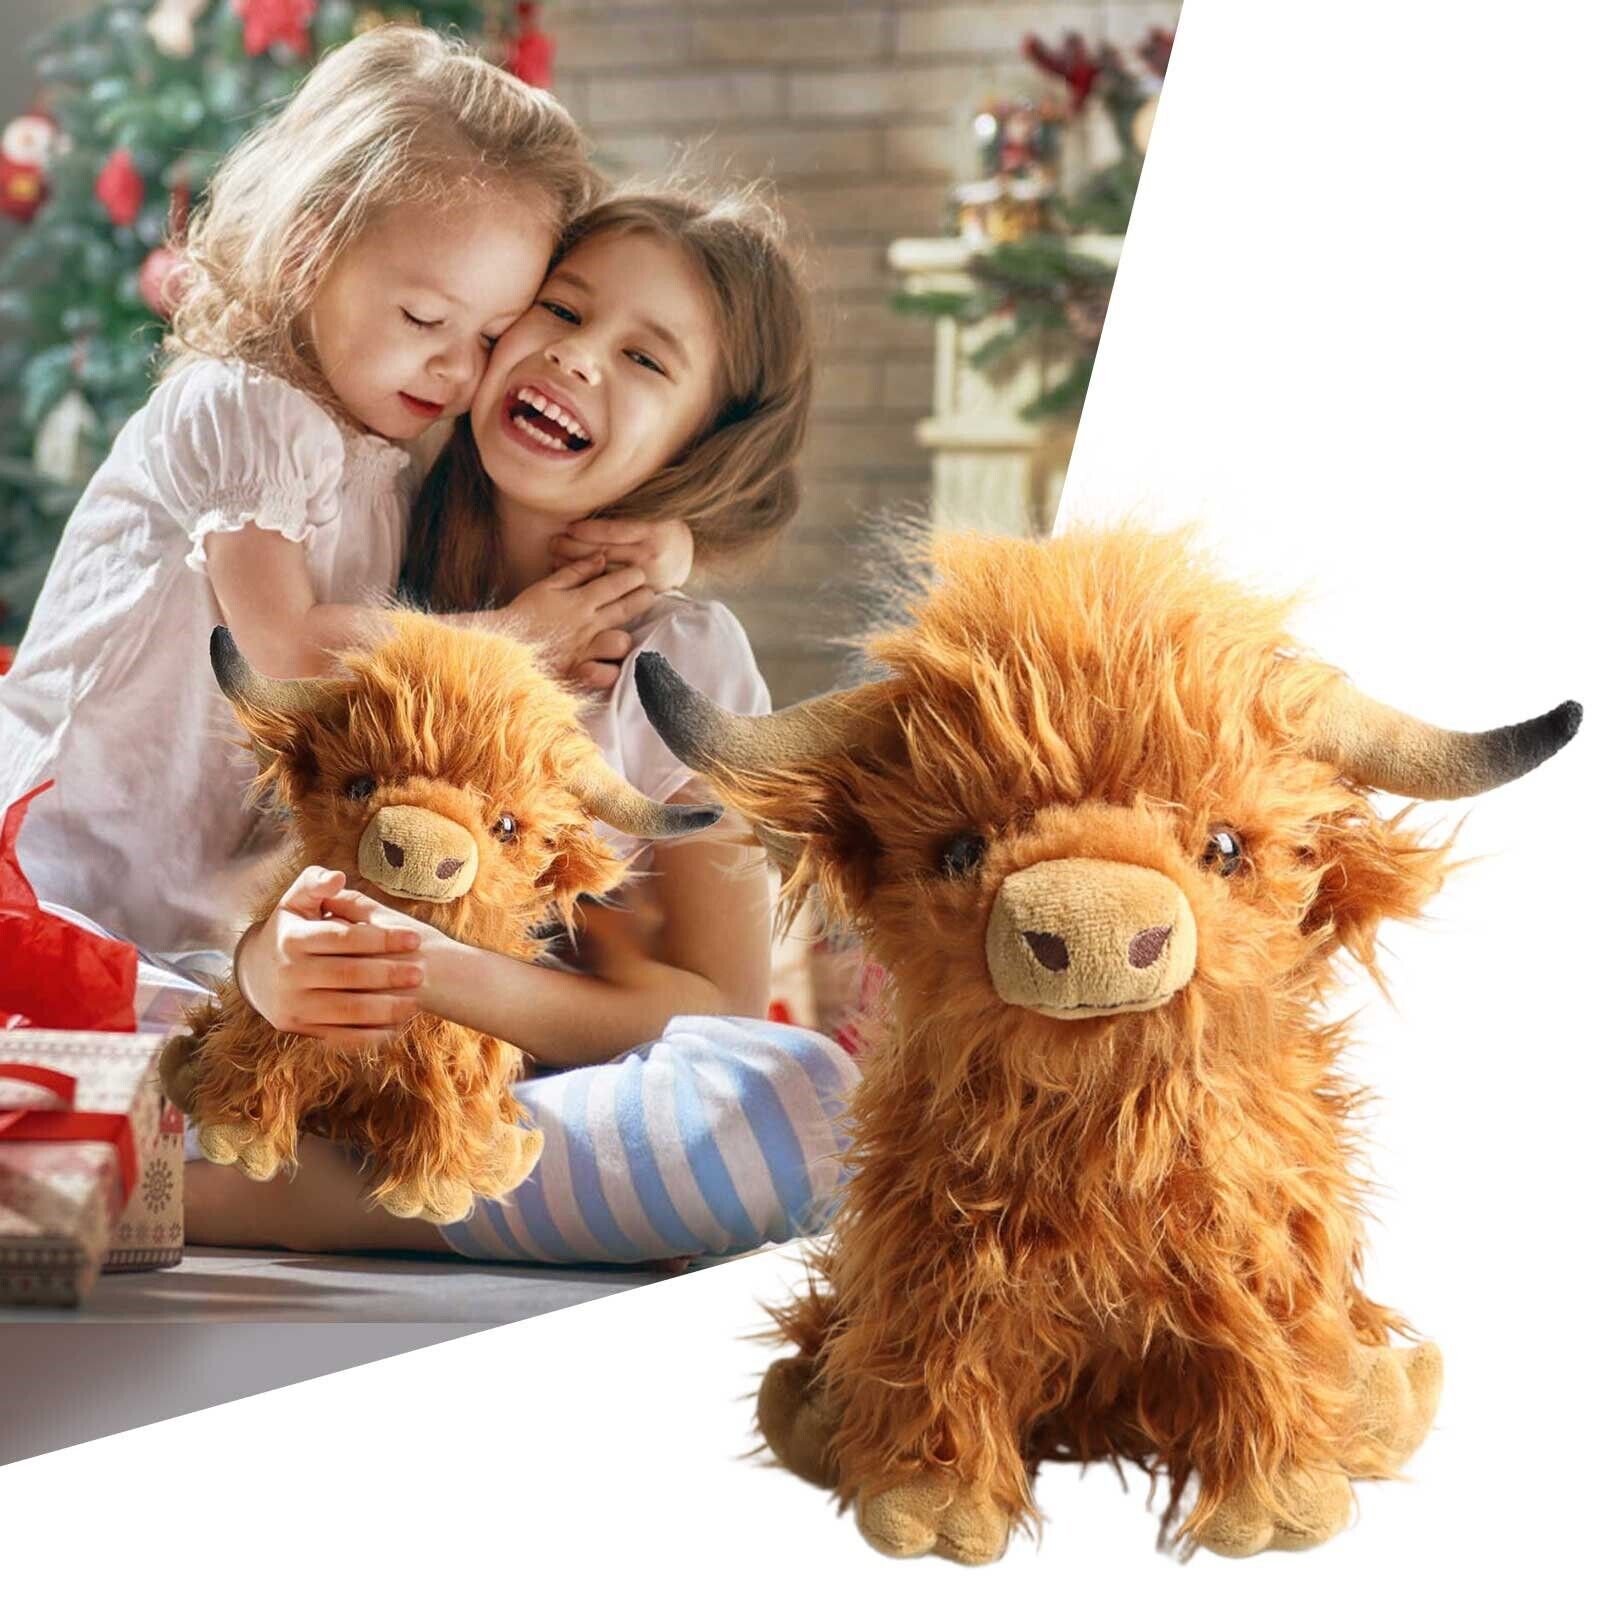 Highlands Cow Stuffed Animal Plush Soft Stuffed Plush Cow Toy For Kids